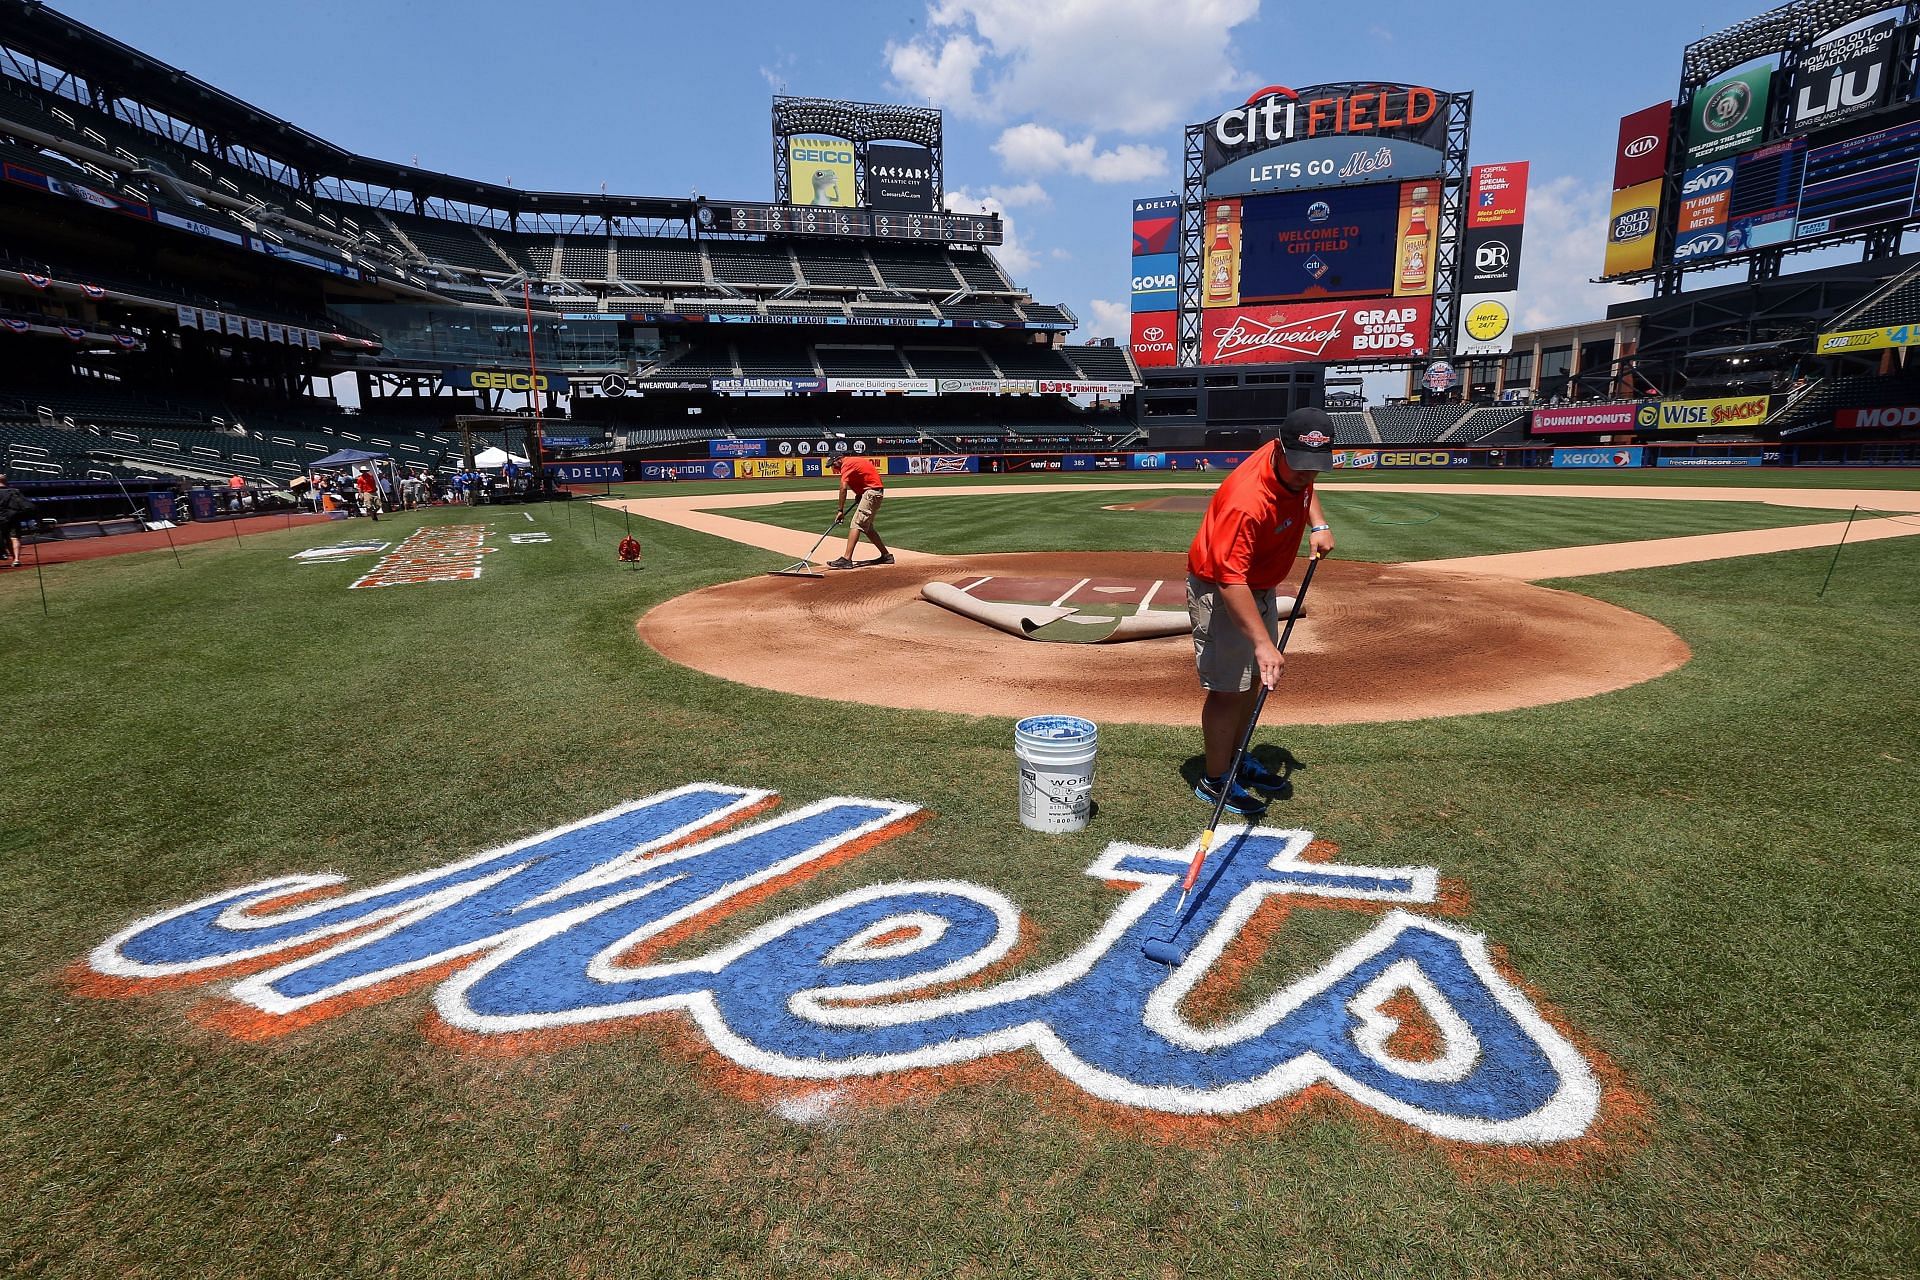 New York Mets - Citi Field (Image via Getty)